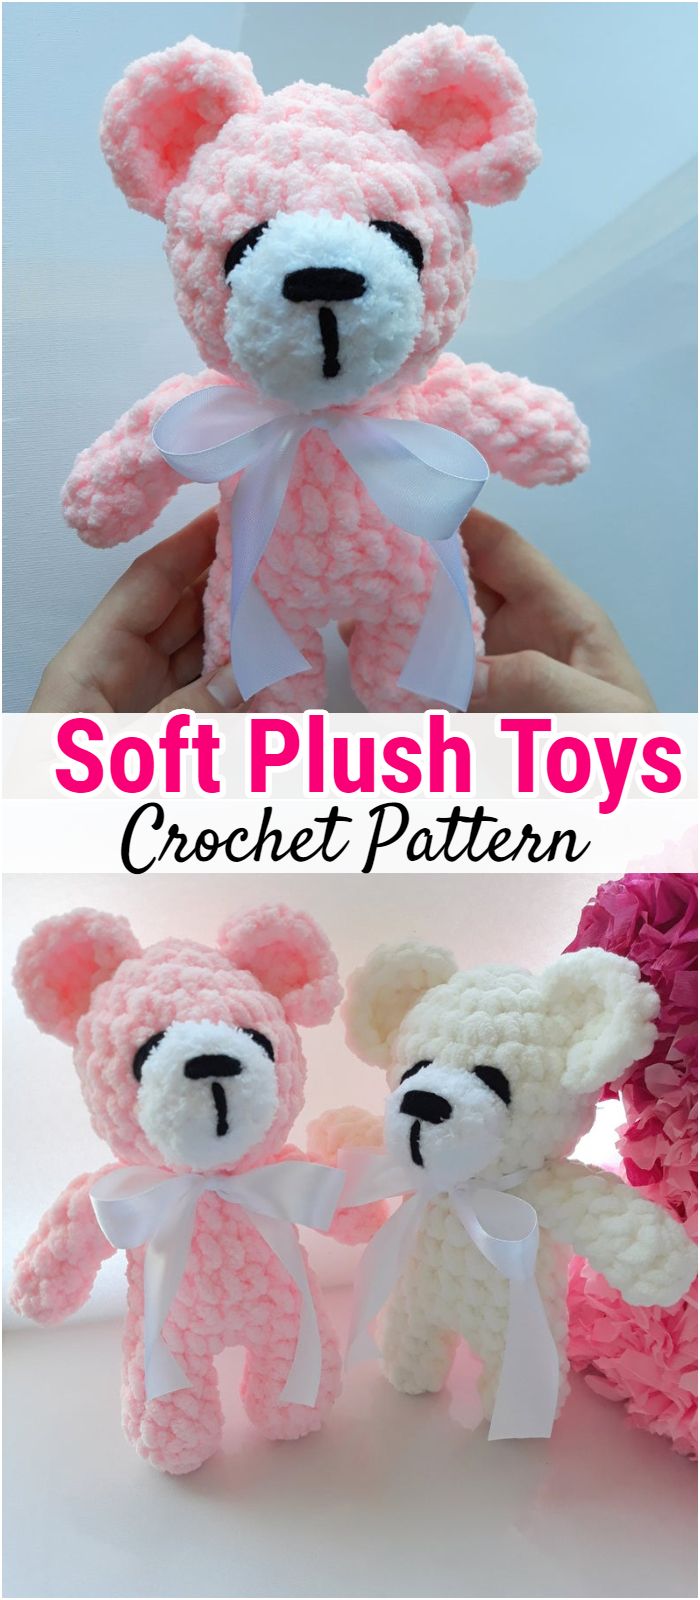 Soft Plush Toys